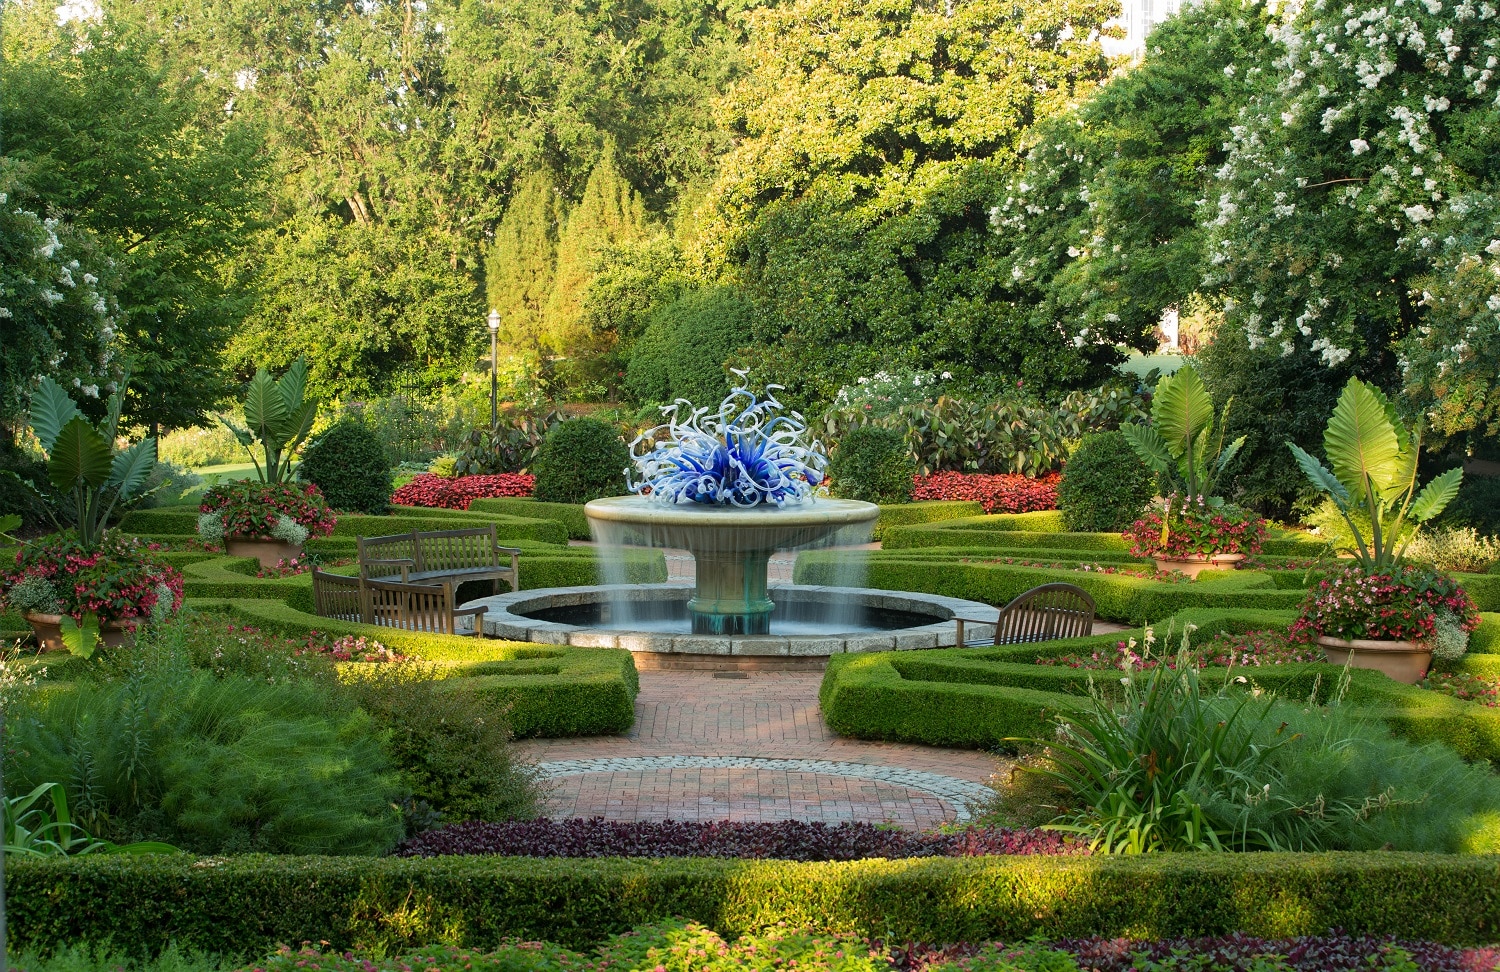 4 Of The Best Ways To Enjoy The Atlanta Botanical Garden By Piedmont Park Stonehurst Place